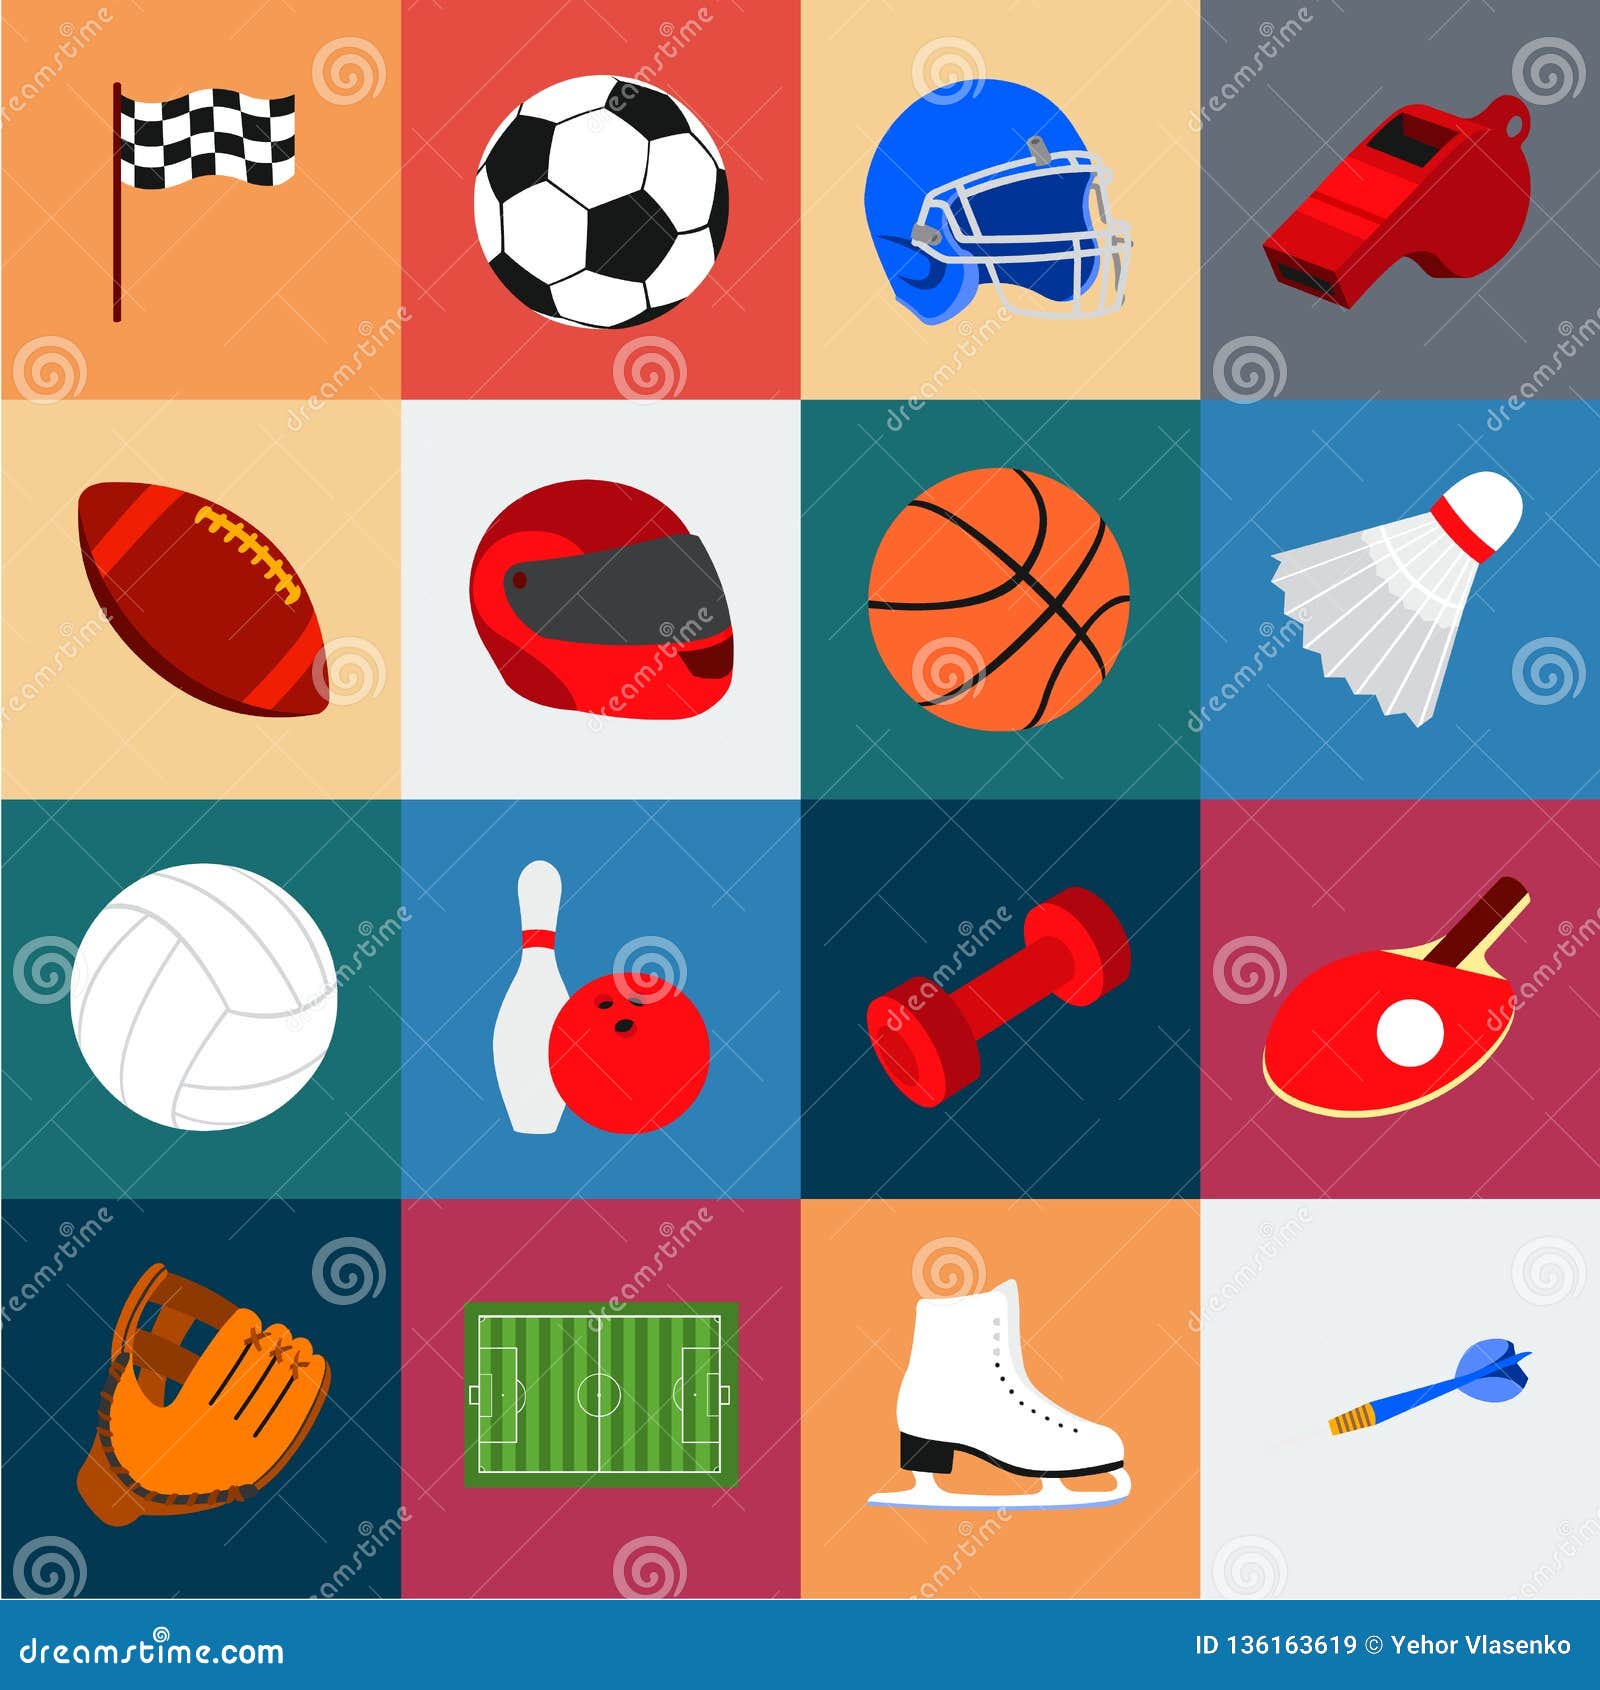 Different kind of sport. Логотип спортивного инвентаря. Web иллюстрация спорт. Different kinds of Sport. Different kinds of Sports.